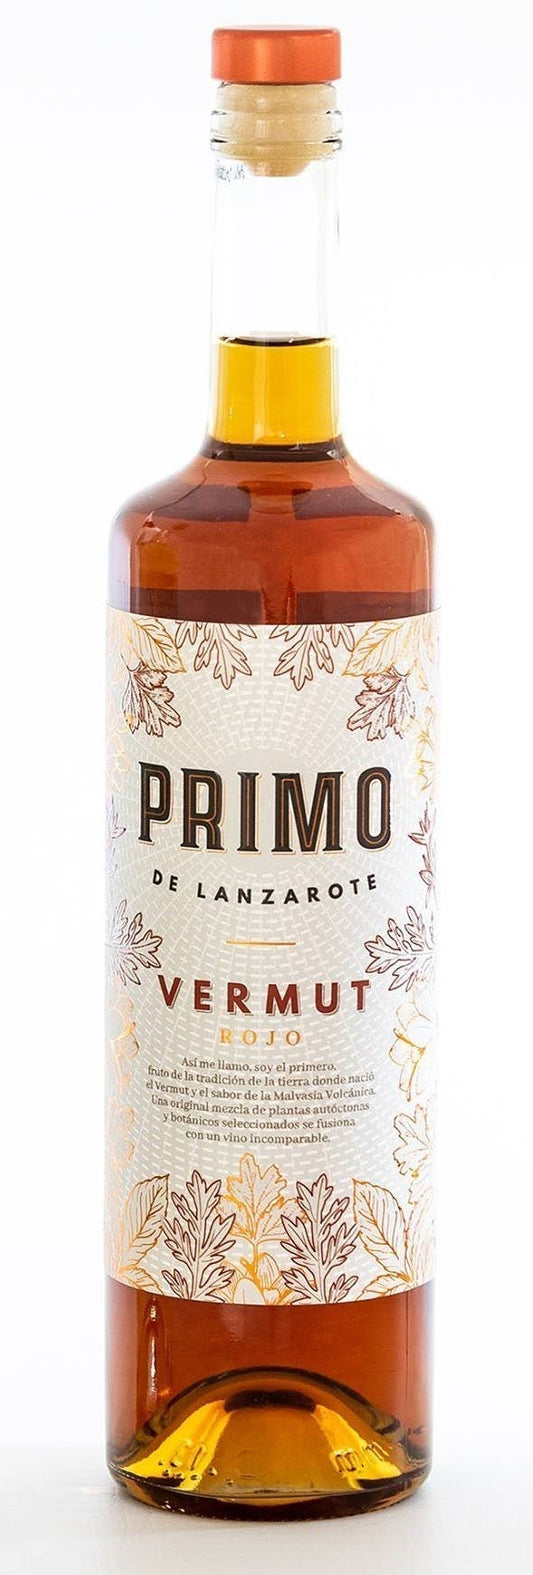 Vermouth rouge - Primo de Lanzarote 75cl